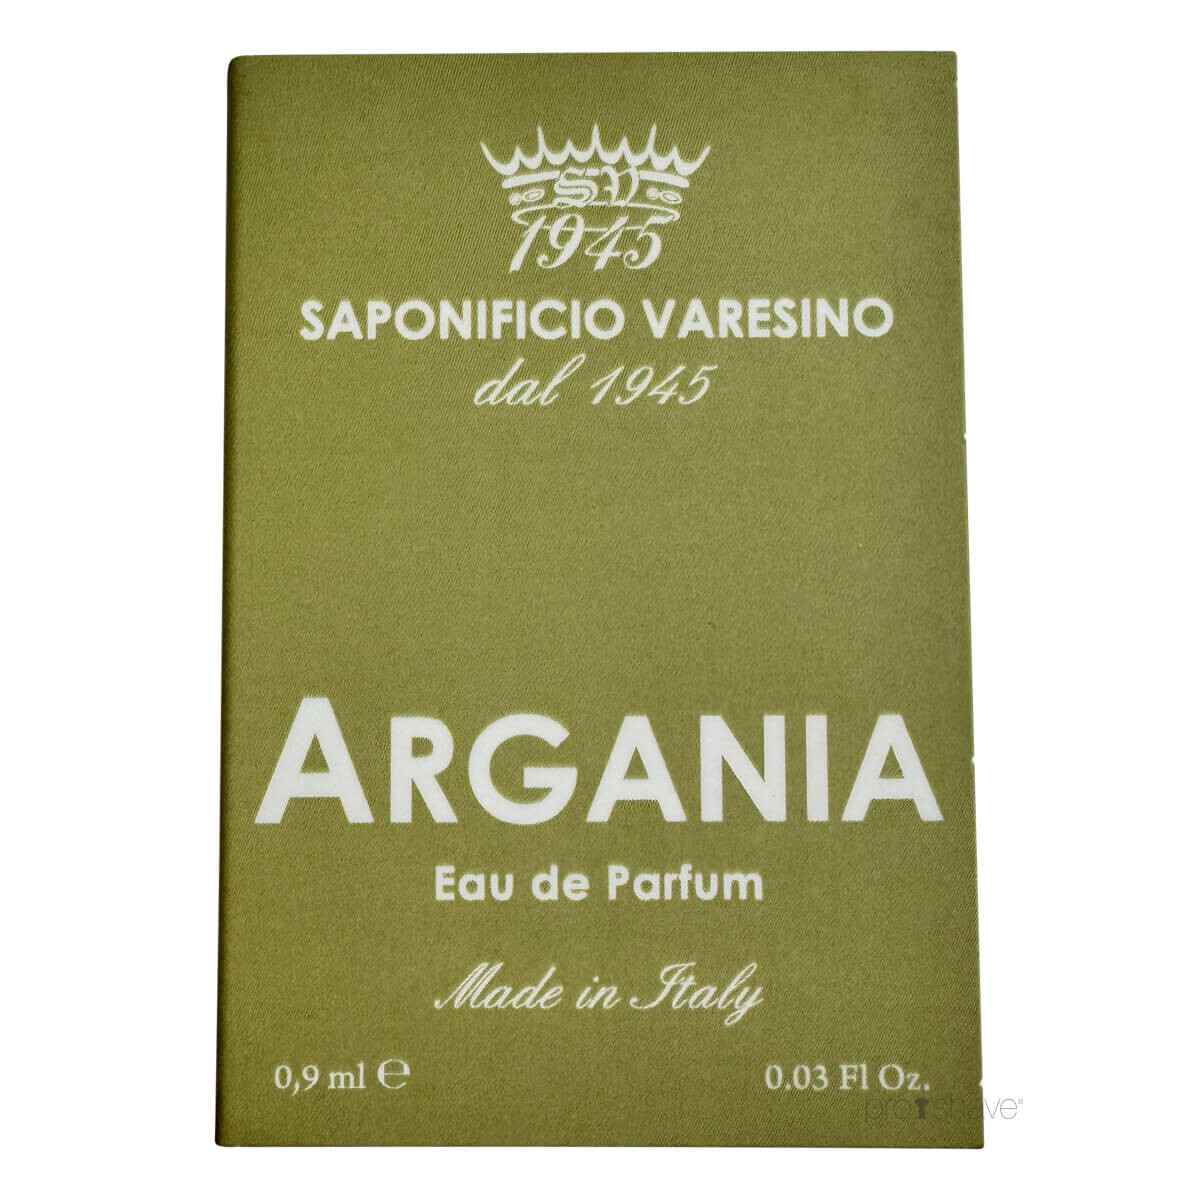 Se Saponificio Varesino Eau de Parfum, Argania, Sample, 0.9 ml. hos Proshave